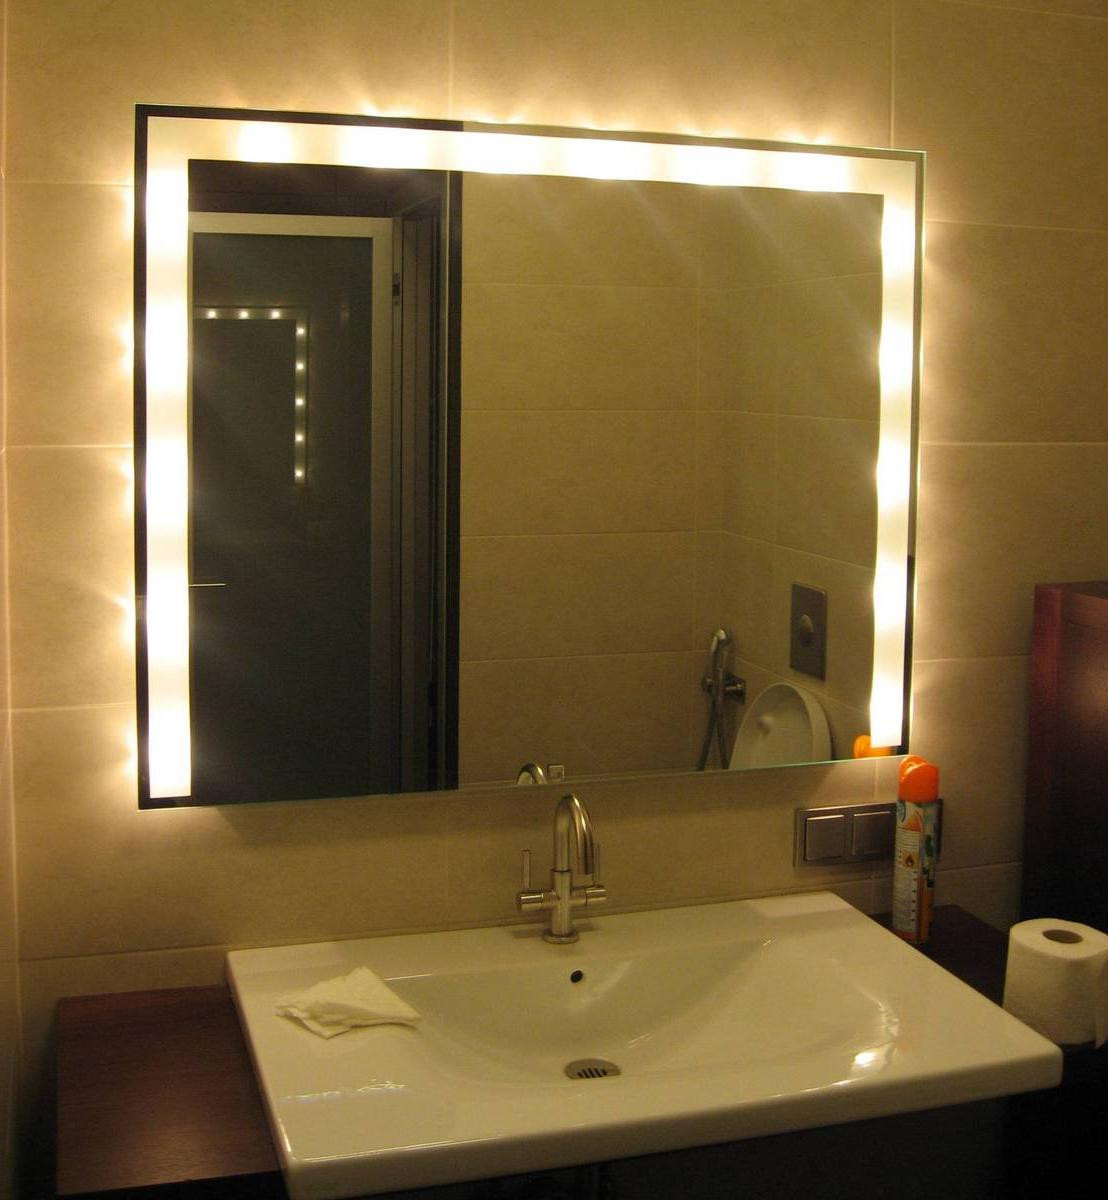 Led Bulbs For Bathroom Vanity
 amazing bathroom led lighting design behind square mirror